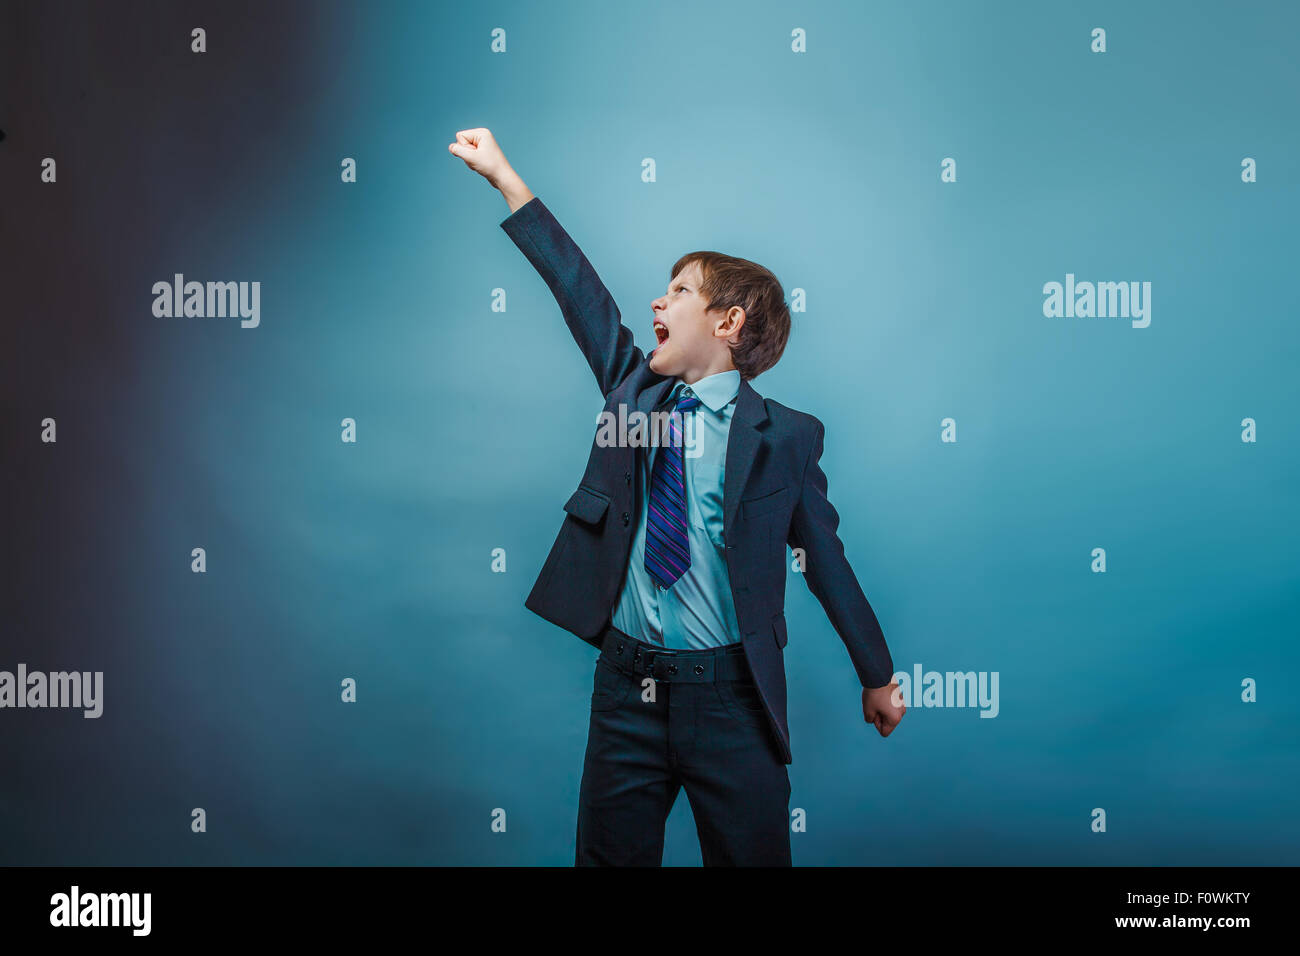 teenage boy superhero flying up raised his fist photo studio asp Stock Photo